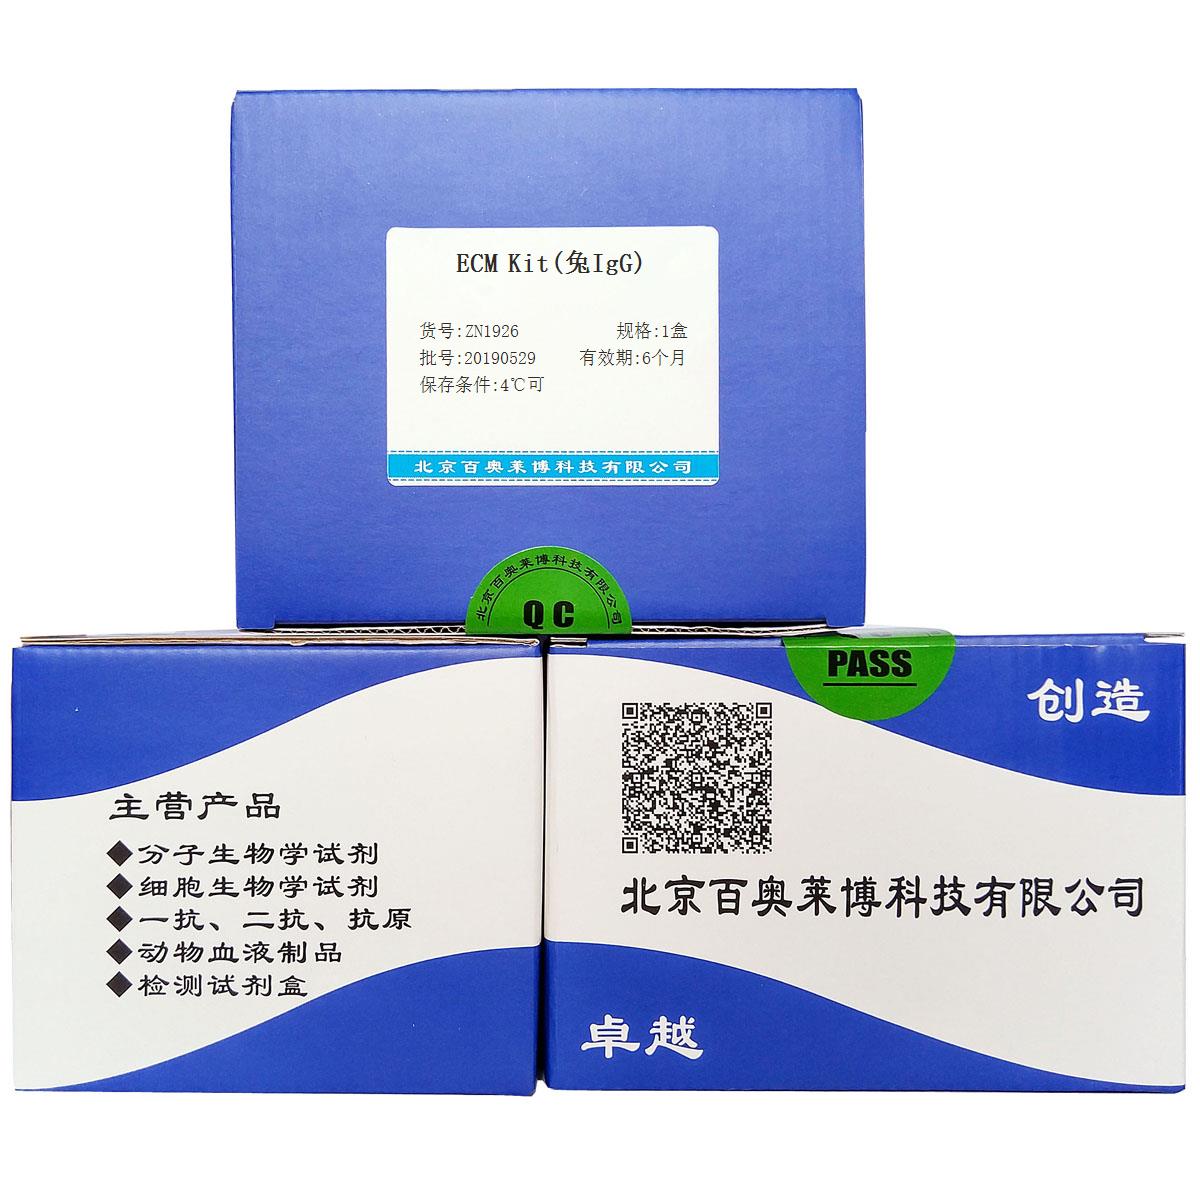 ECM Kit(兔IgG)北京供应商